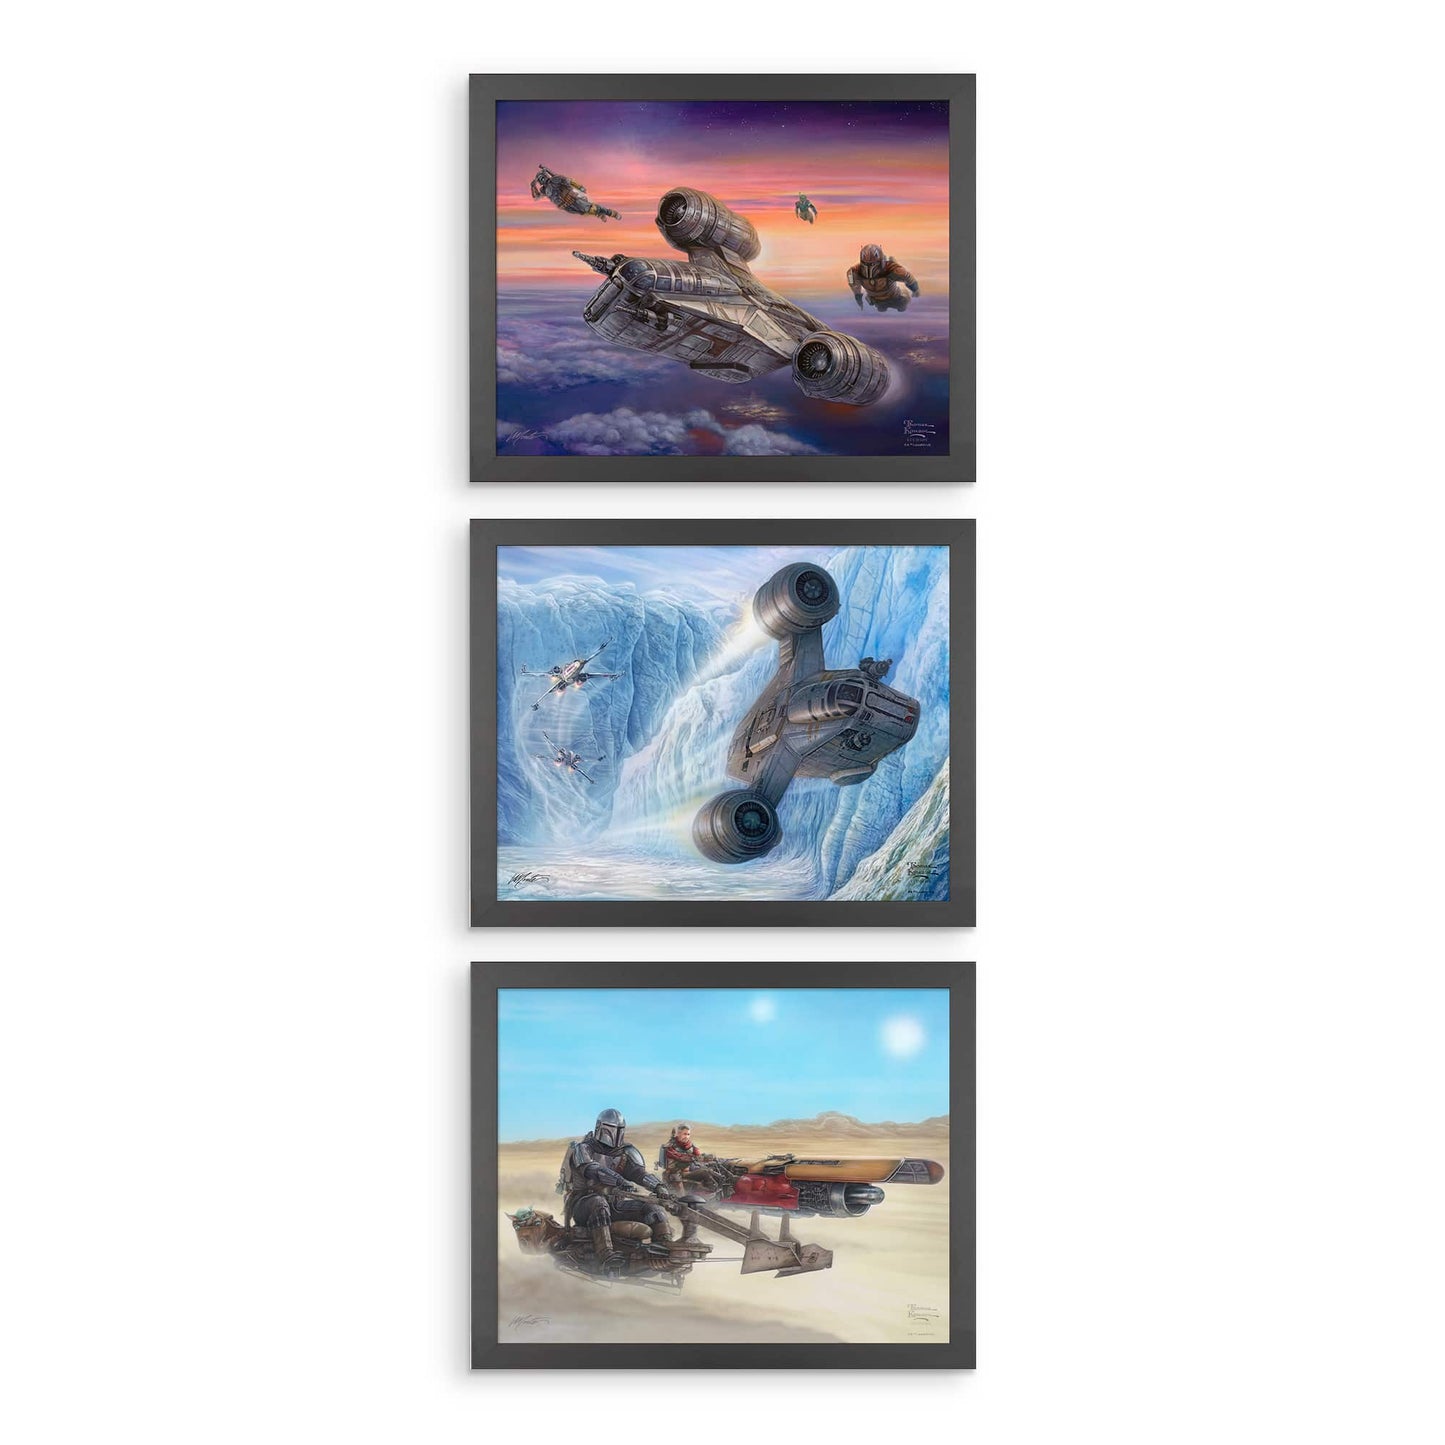 The-Mandalorian-Set-of-3-11x14-Framed-Art-Prints.jpg